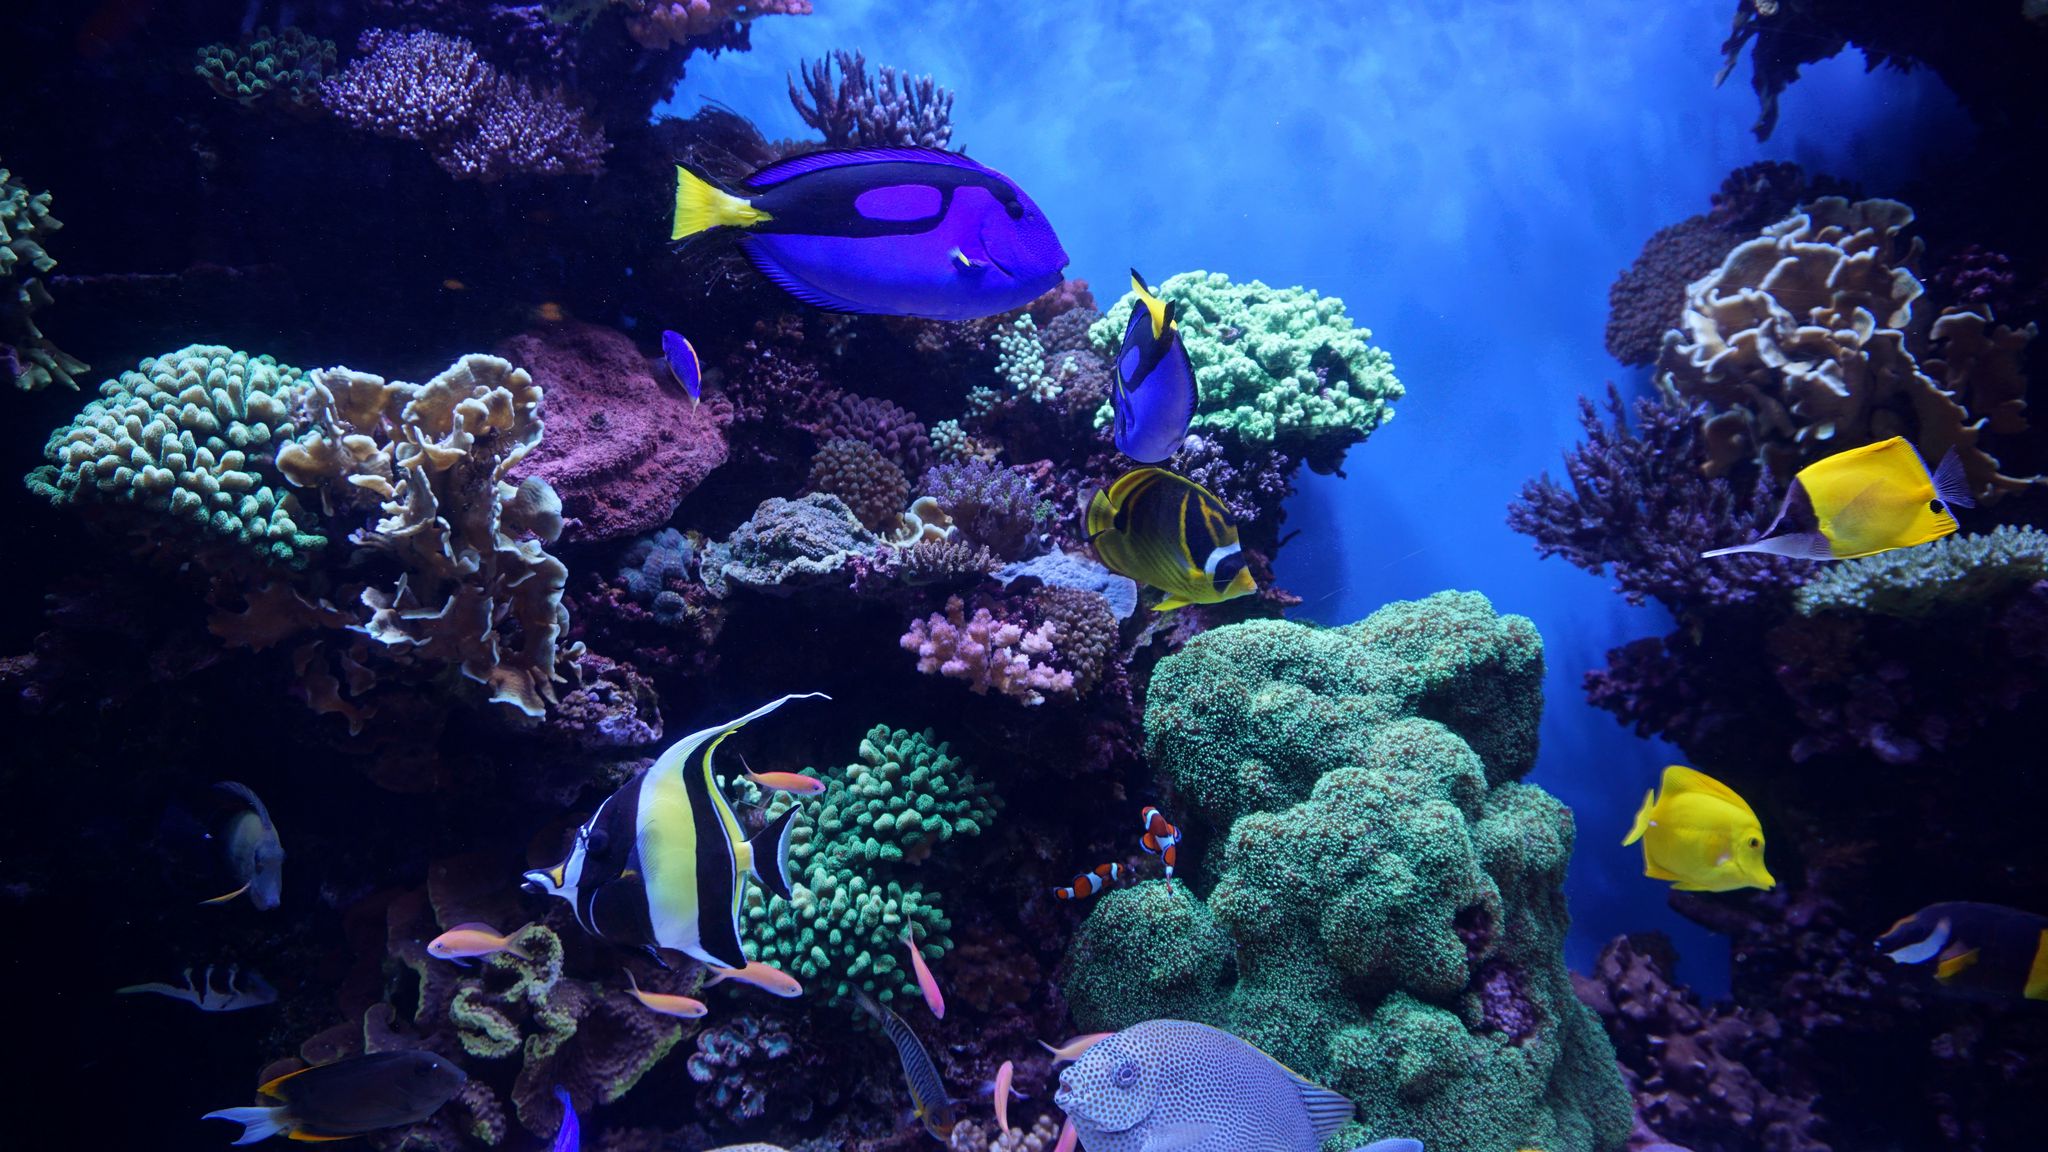 Download wallpaper 2048x1152 aquarium, fish, algae, reef ultrawide ...